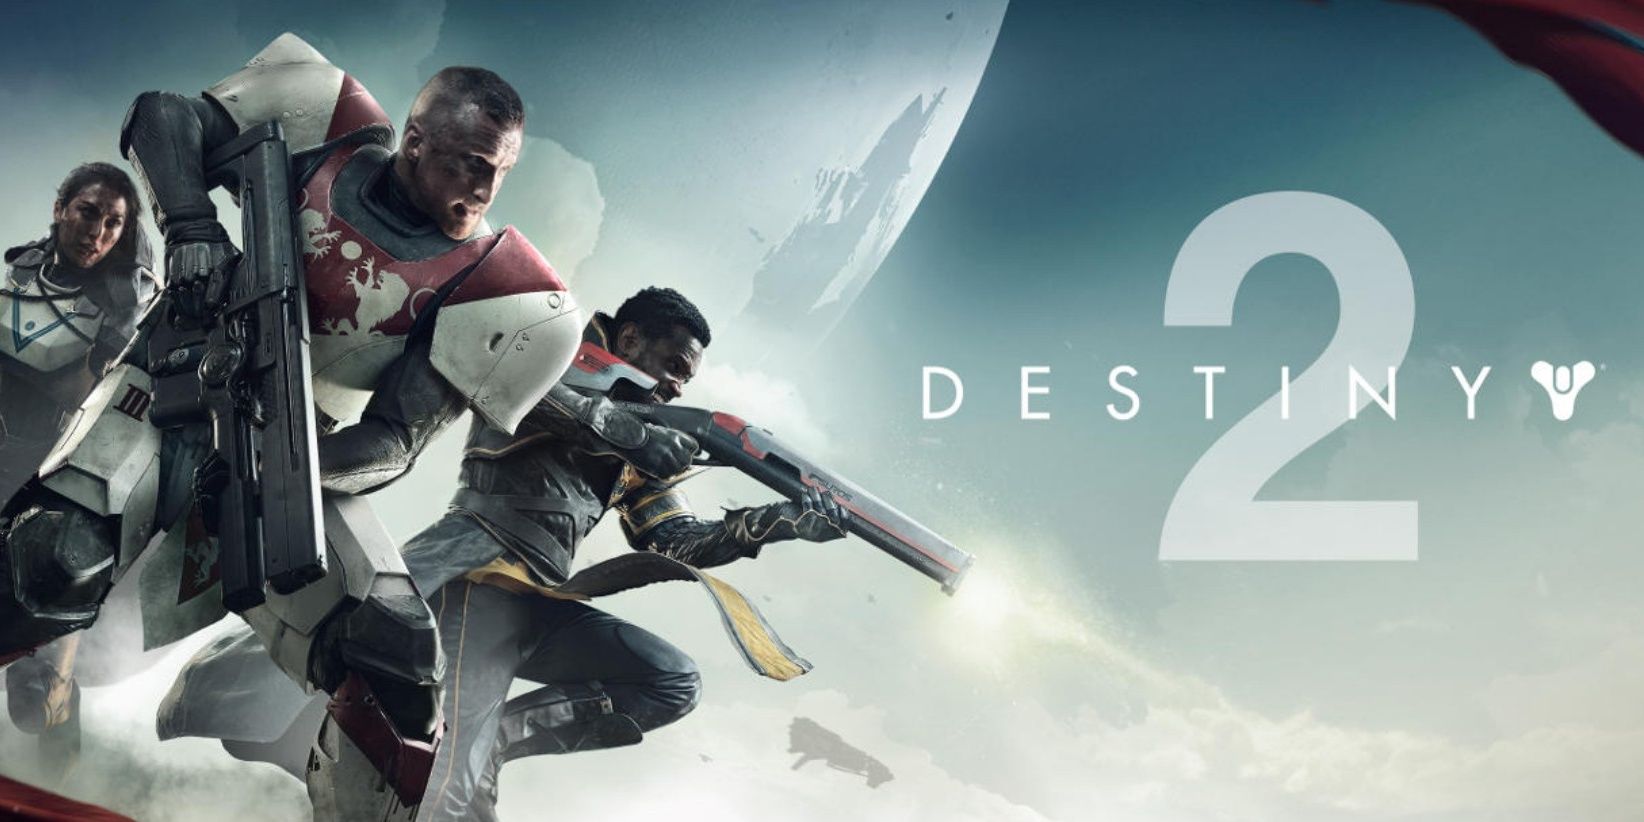 Destiny 2 Promotional Image 